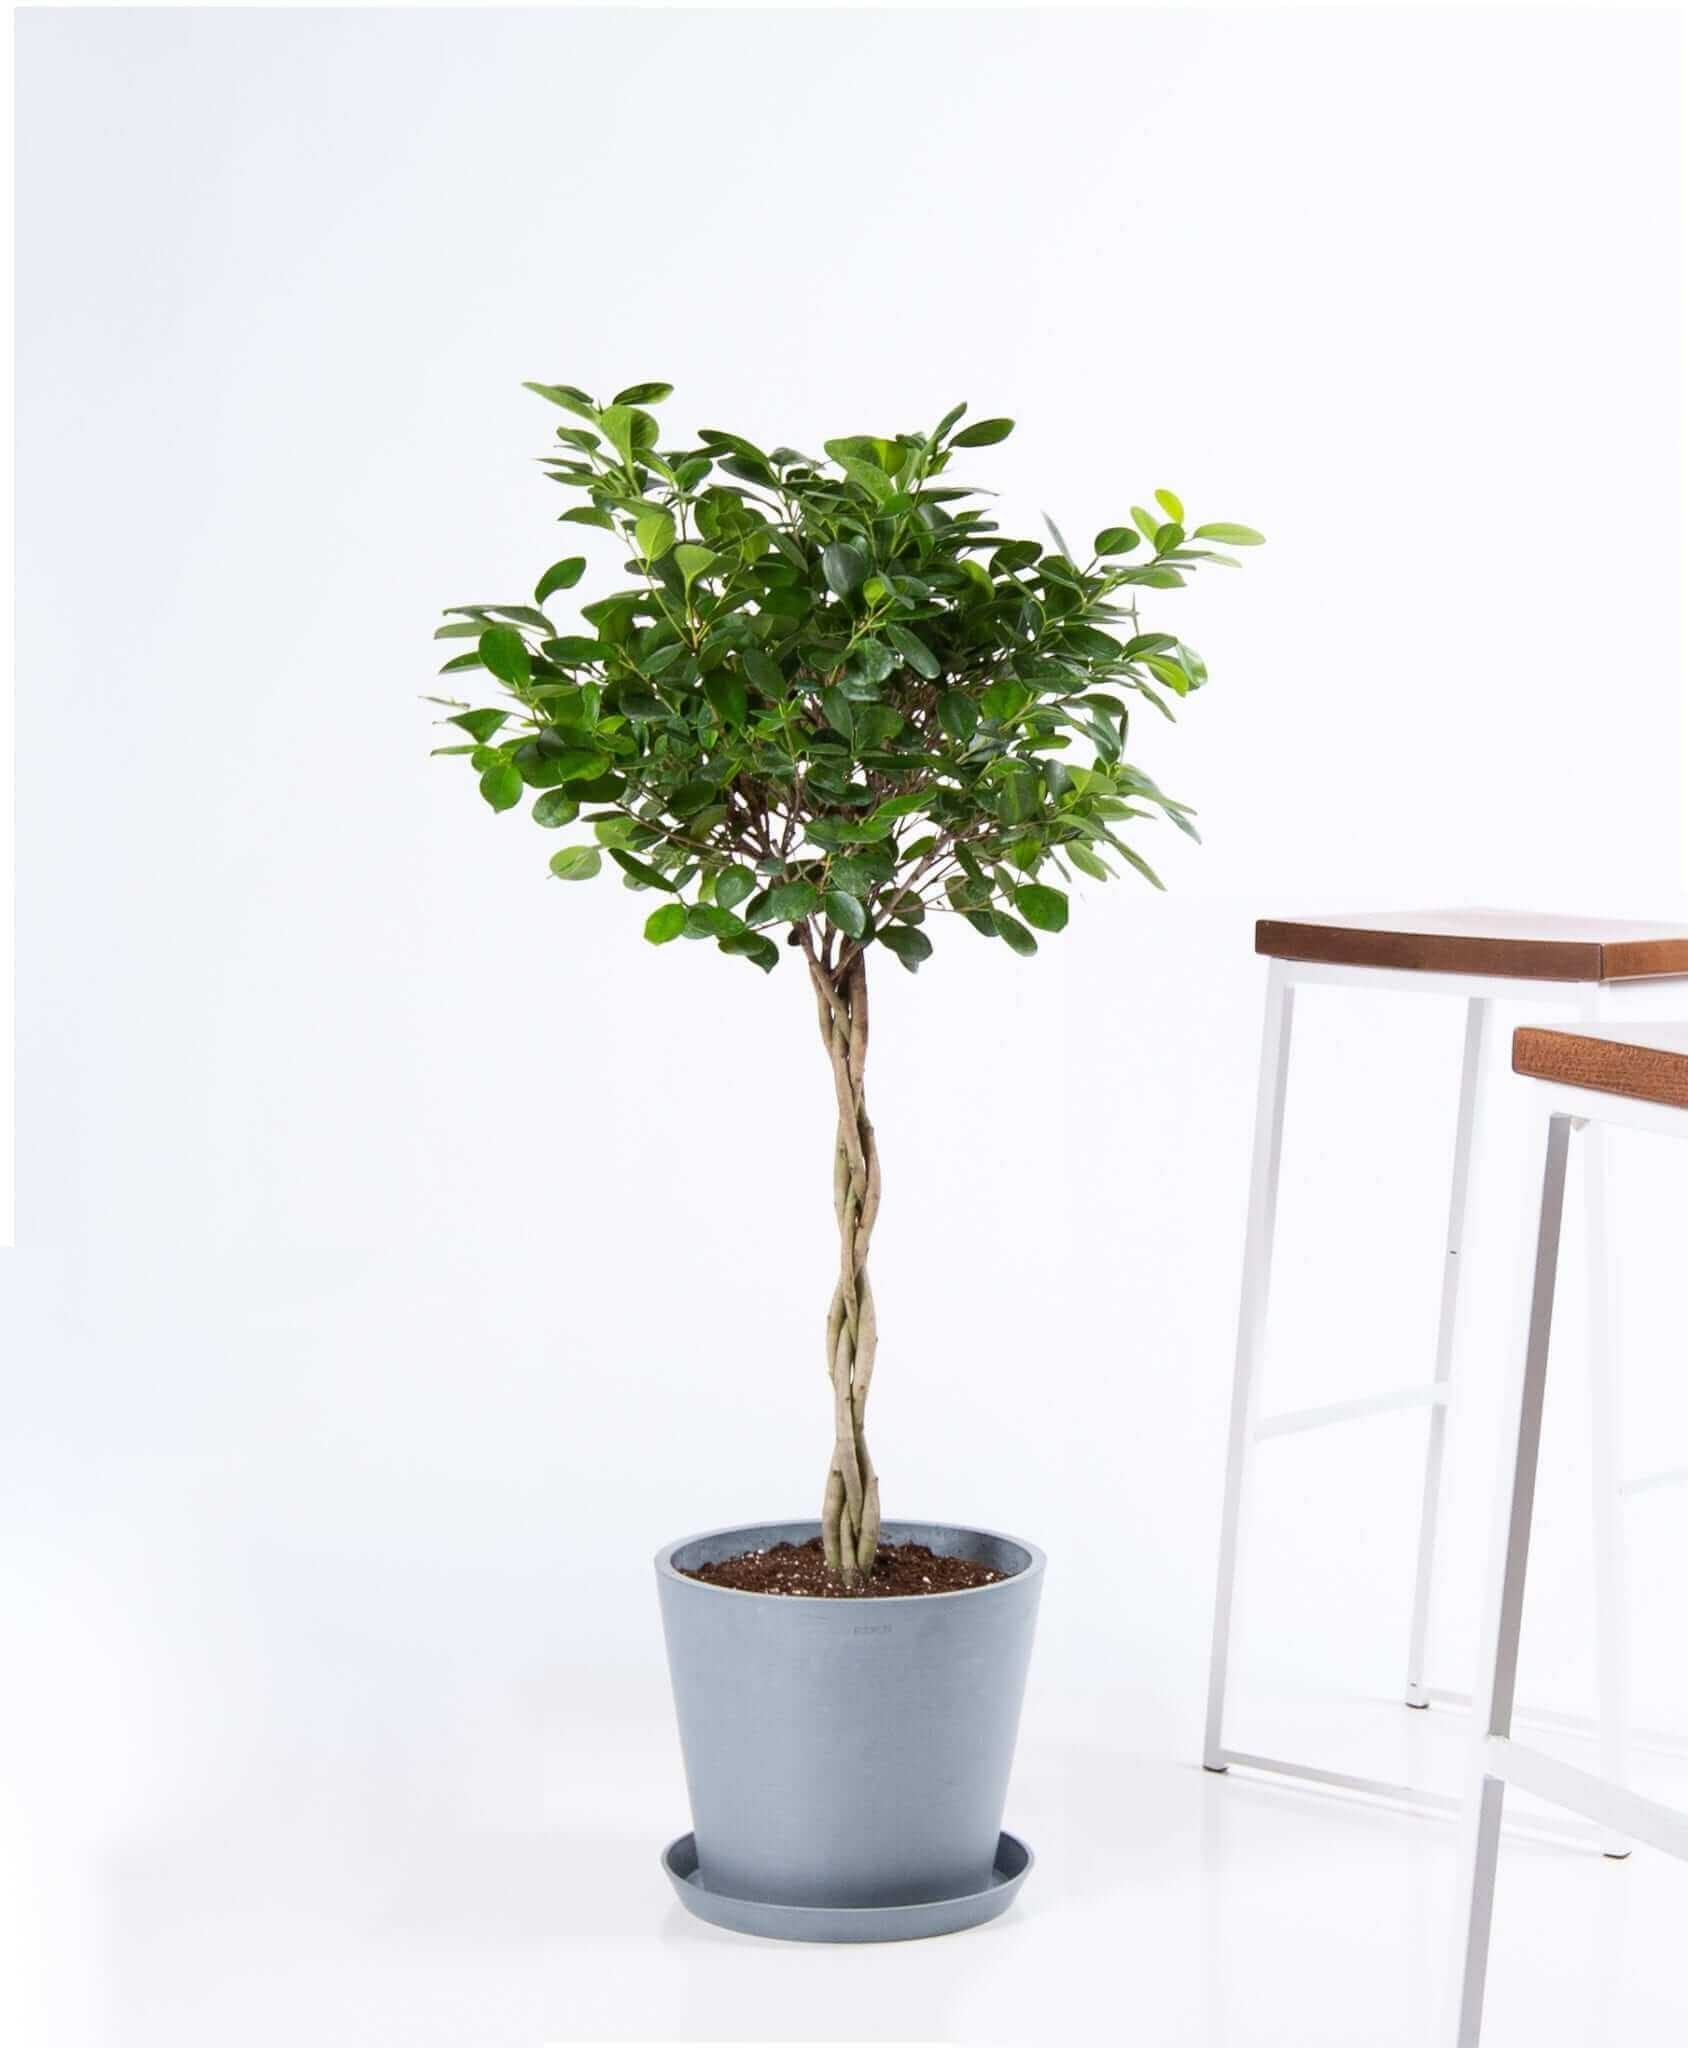 Ficus danielle - Slate - Image 0